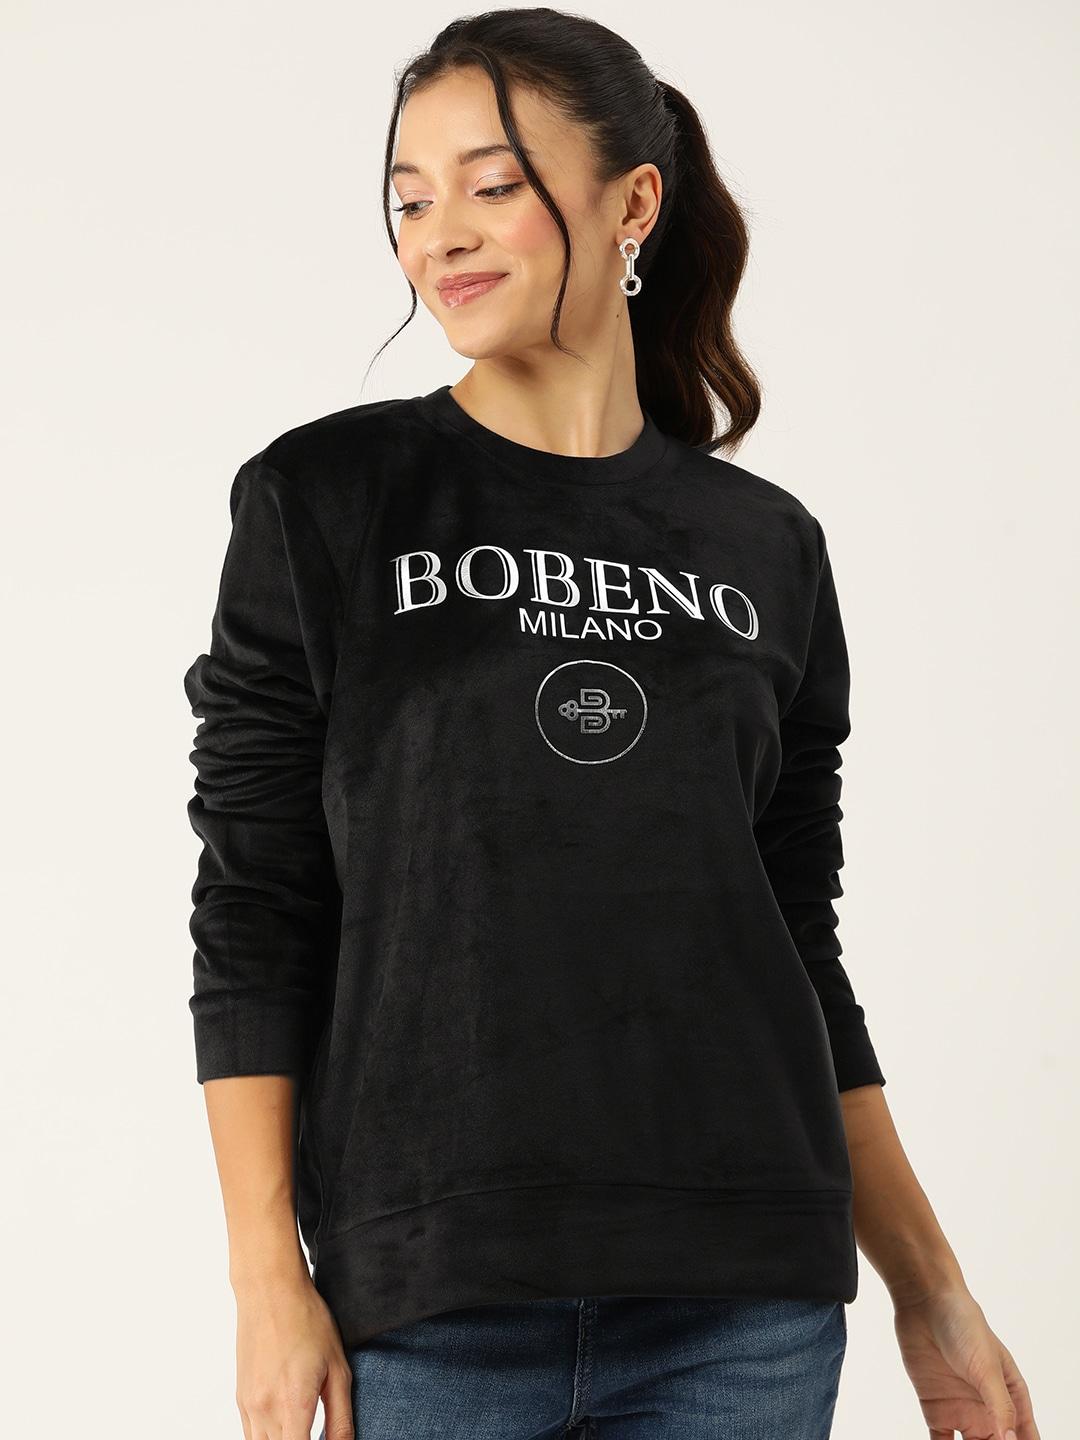 bobeno milano brand logo printed velvet longline sweatshirt